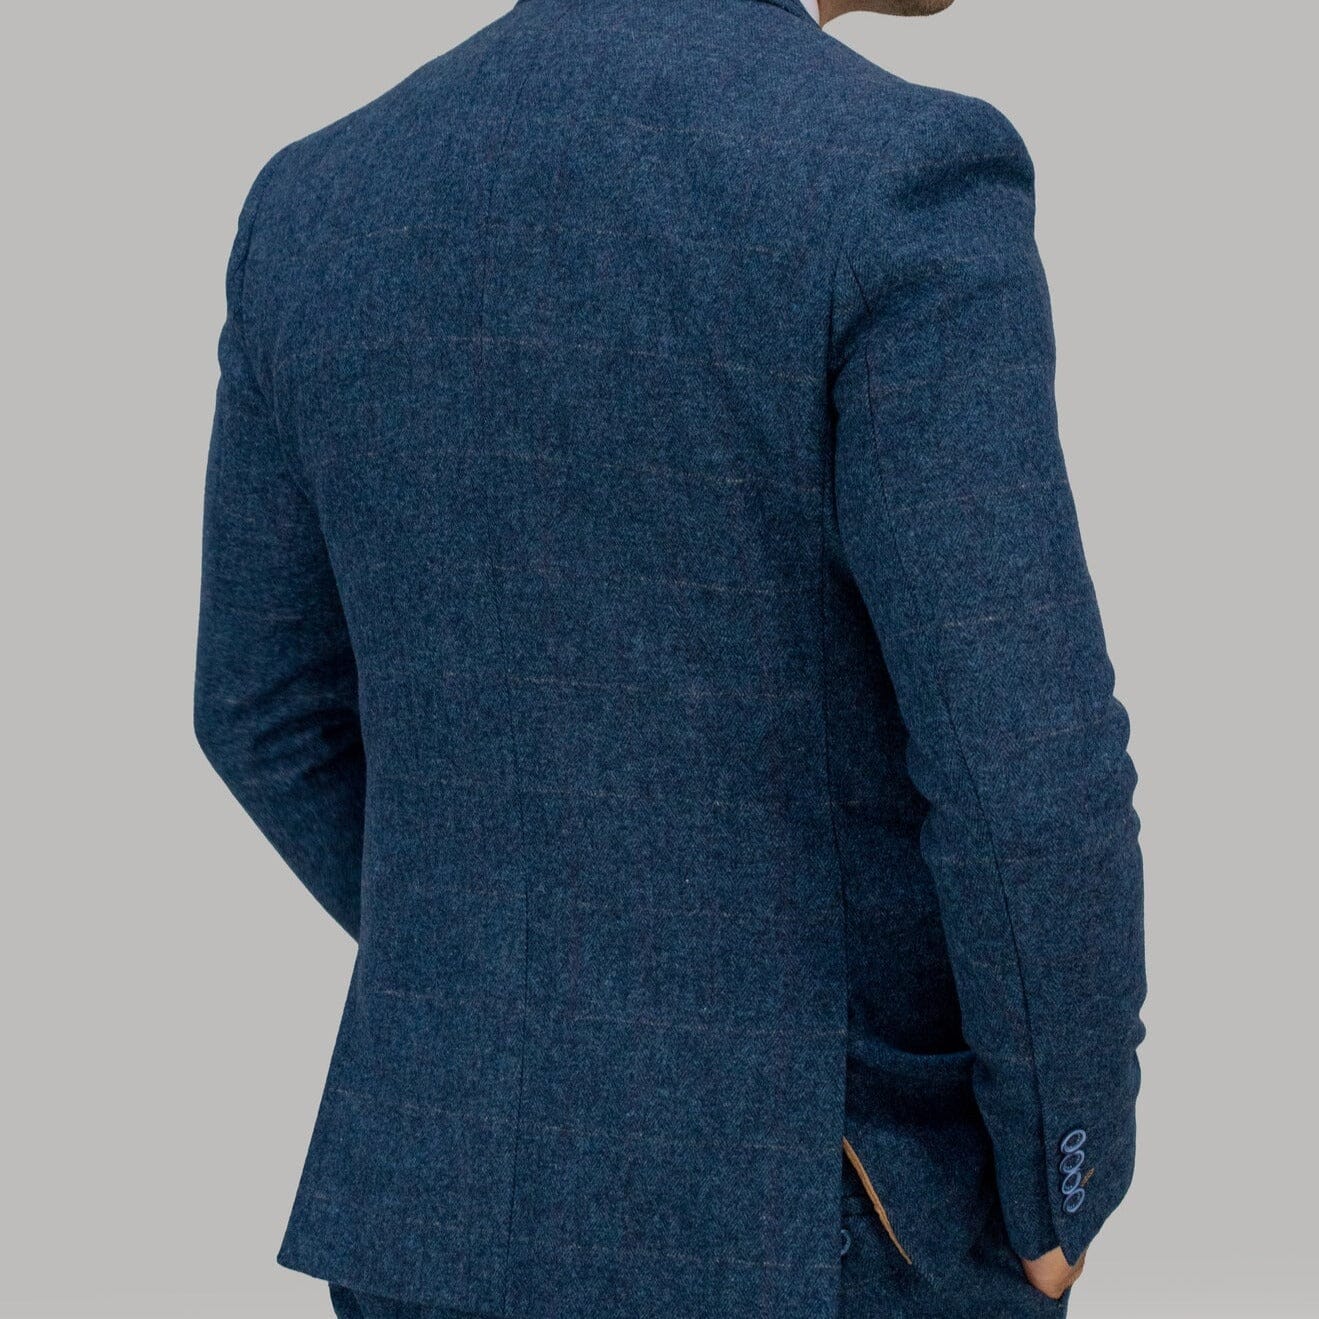 Blue Tweed Jacket - STOCK CLEARANCE - Blazers & Jackets Sale - - THREADPEPPER